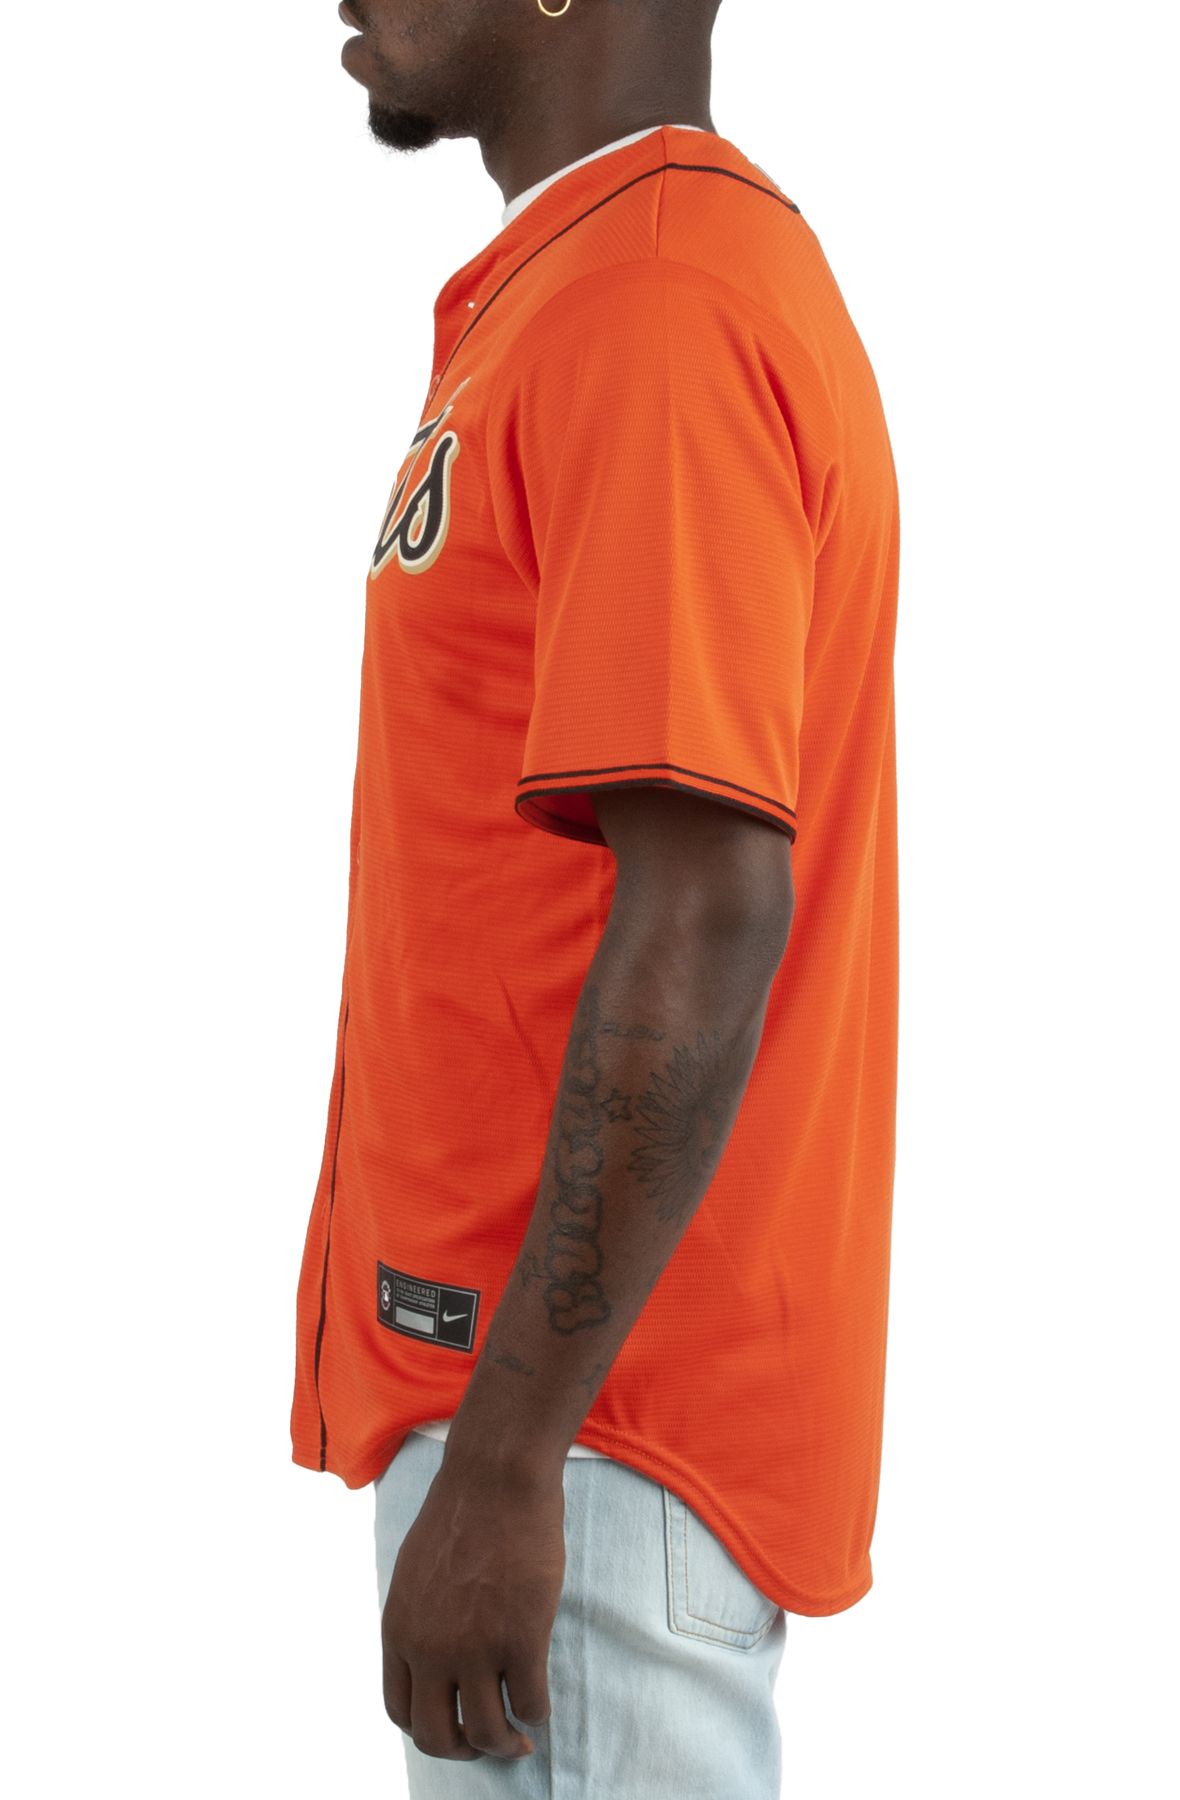 Youth San Francisco Giants Nike Orange Alternate Replica Jersey